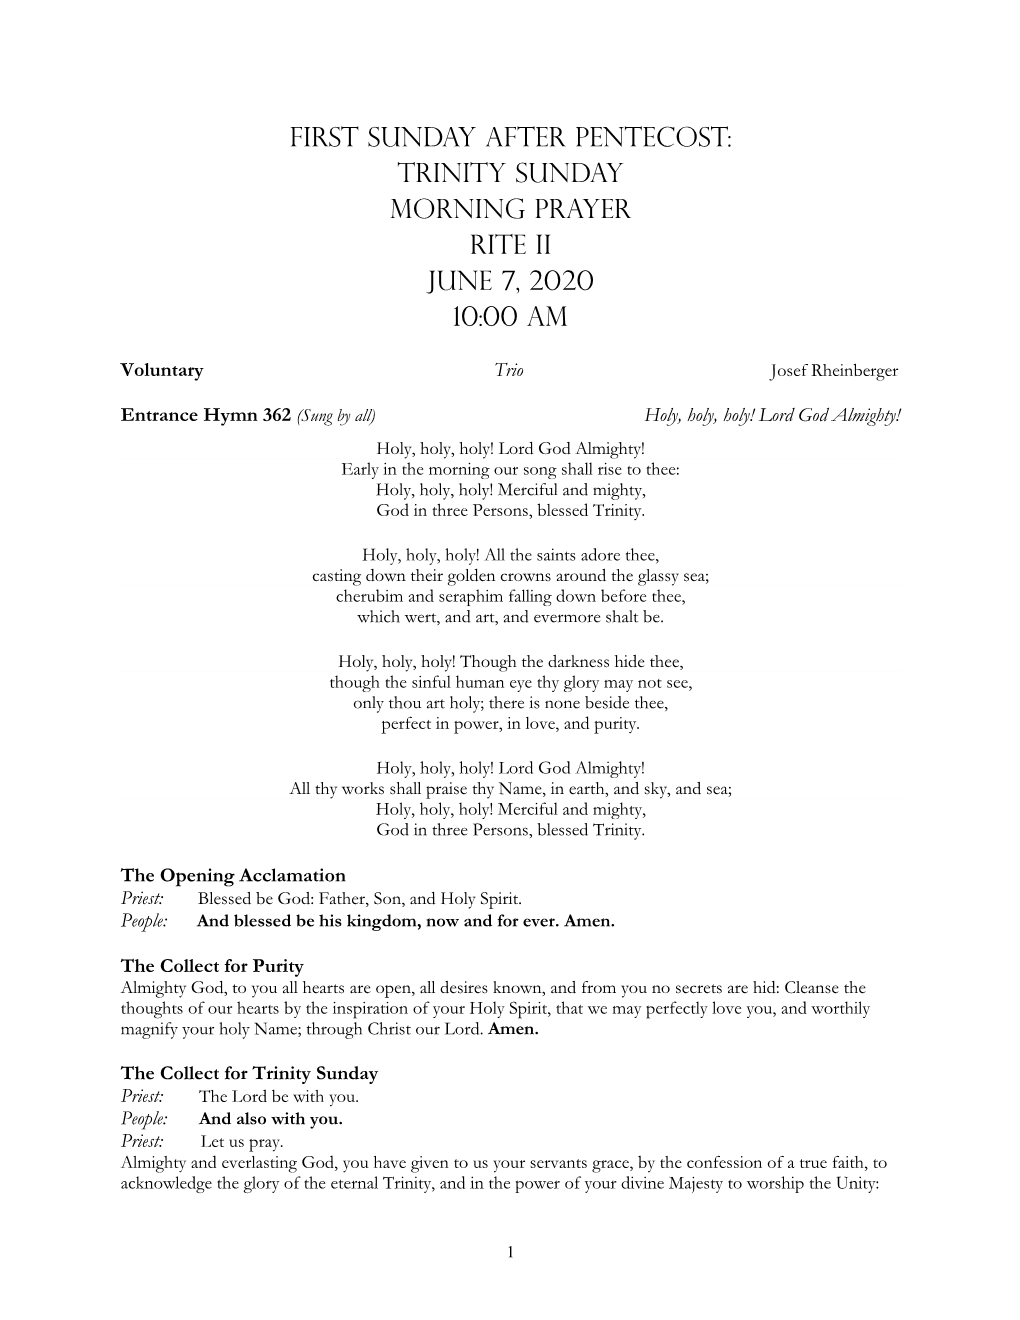 First Sunday After Pentecost: Trinity Sunday Morning Prayer Rite II June 7, 2020 10:00 AM